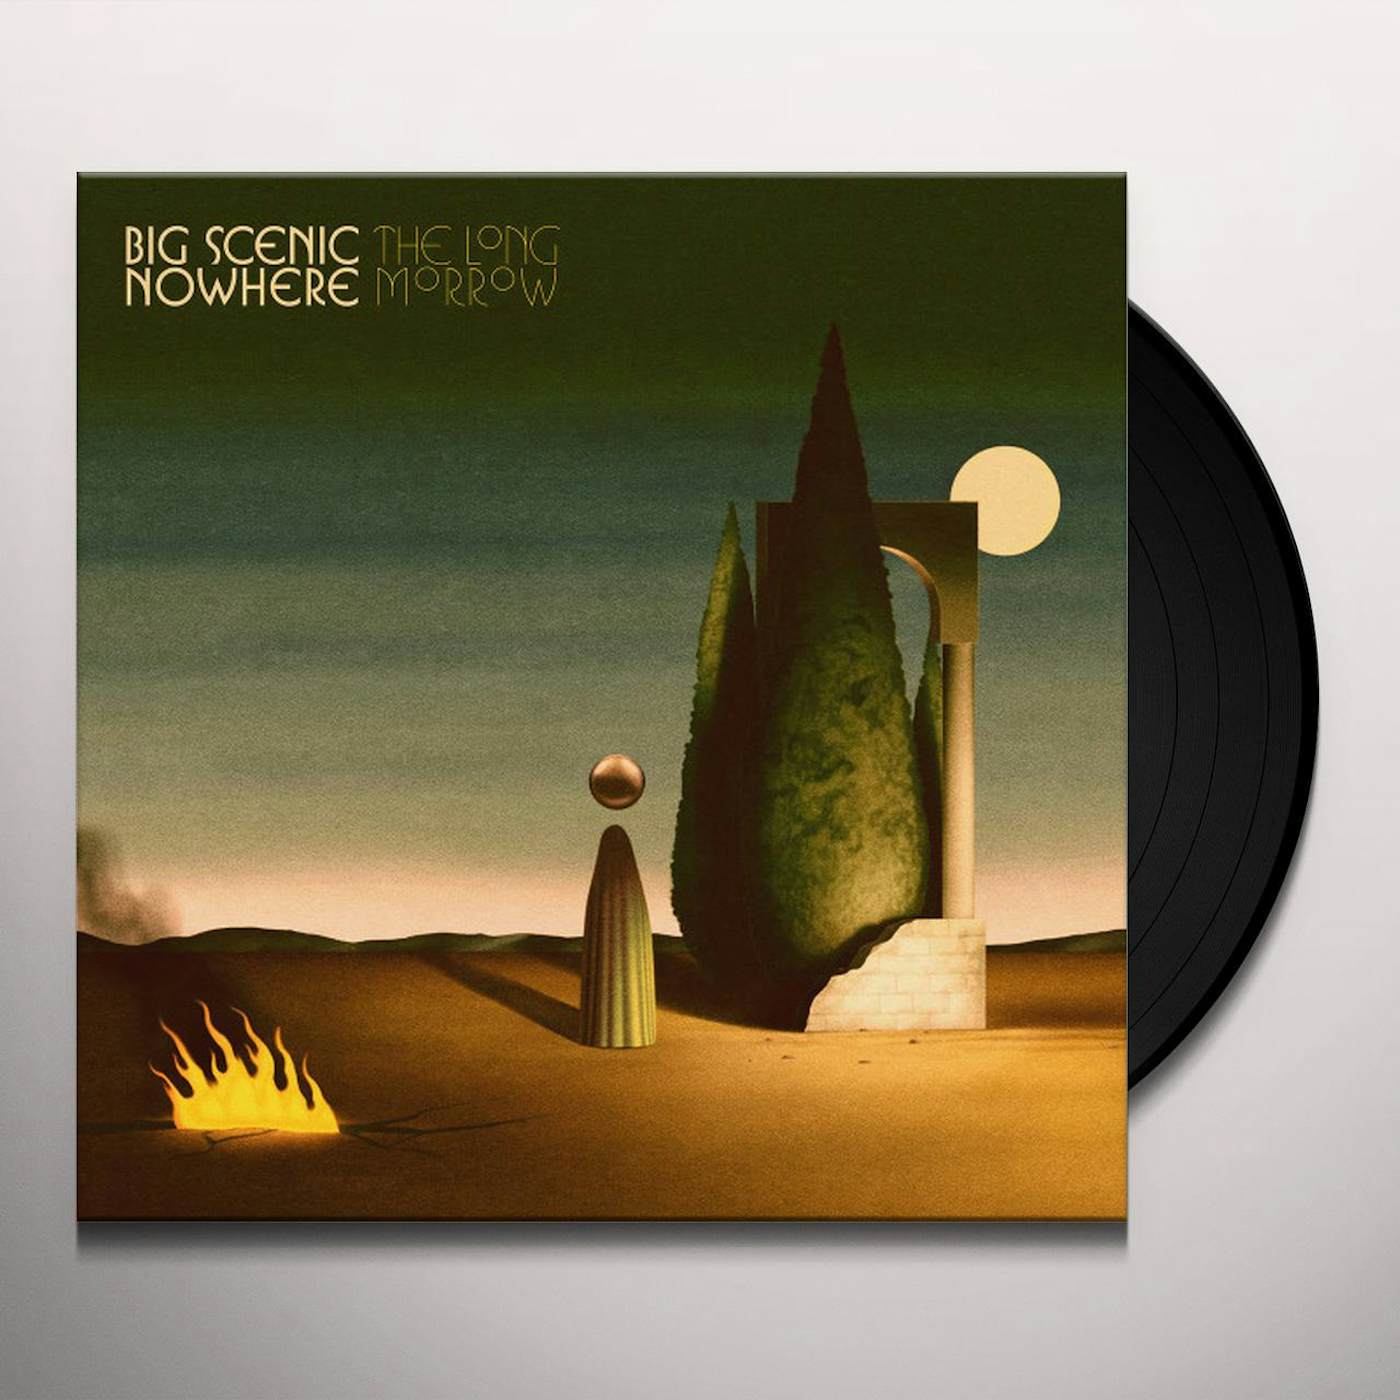 Big Scenic Nowhere Long Morrow Vinyl Record